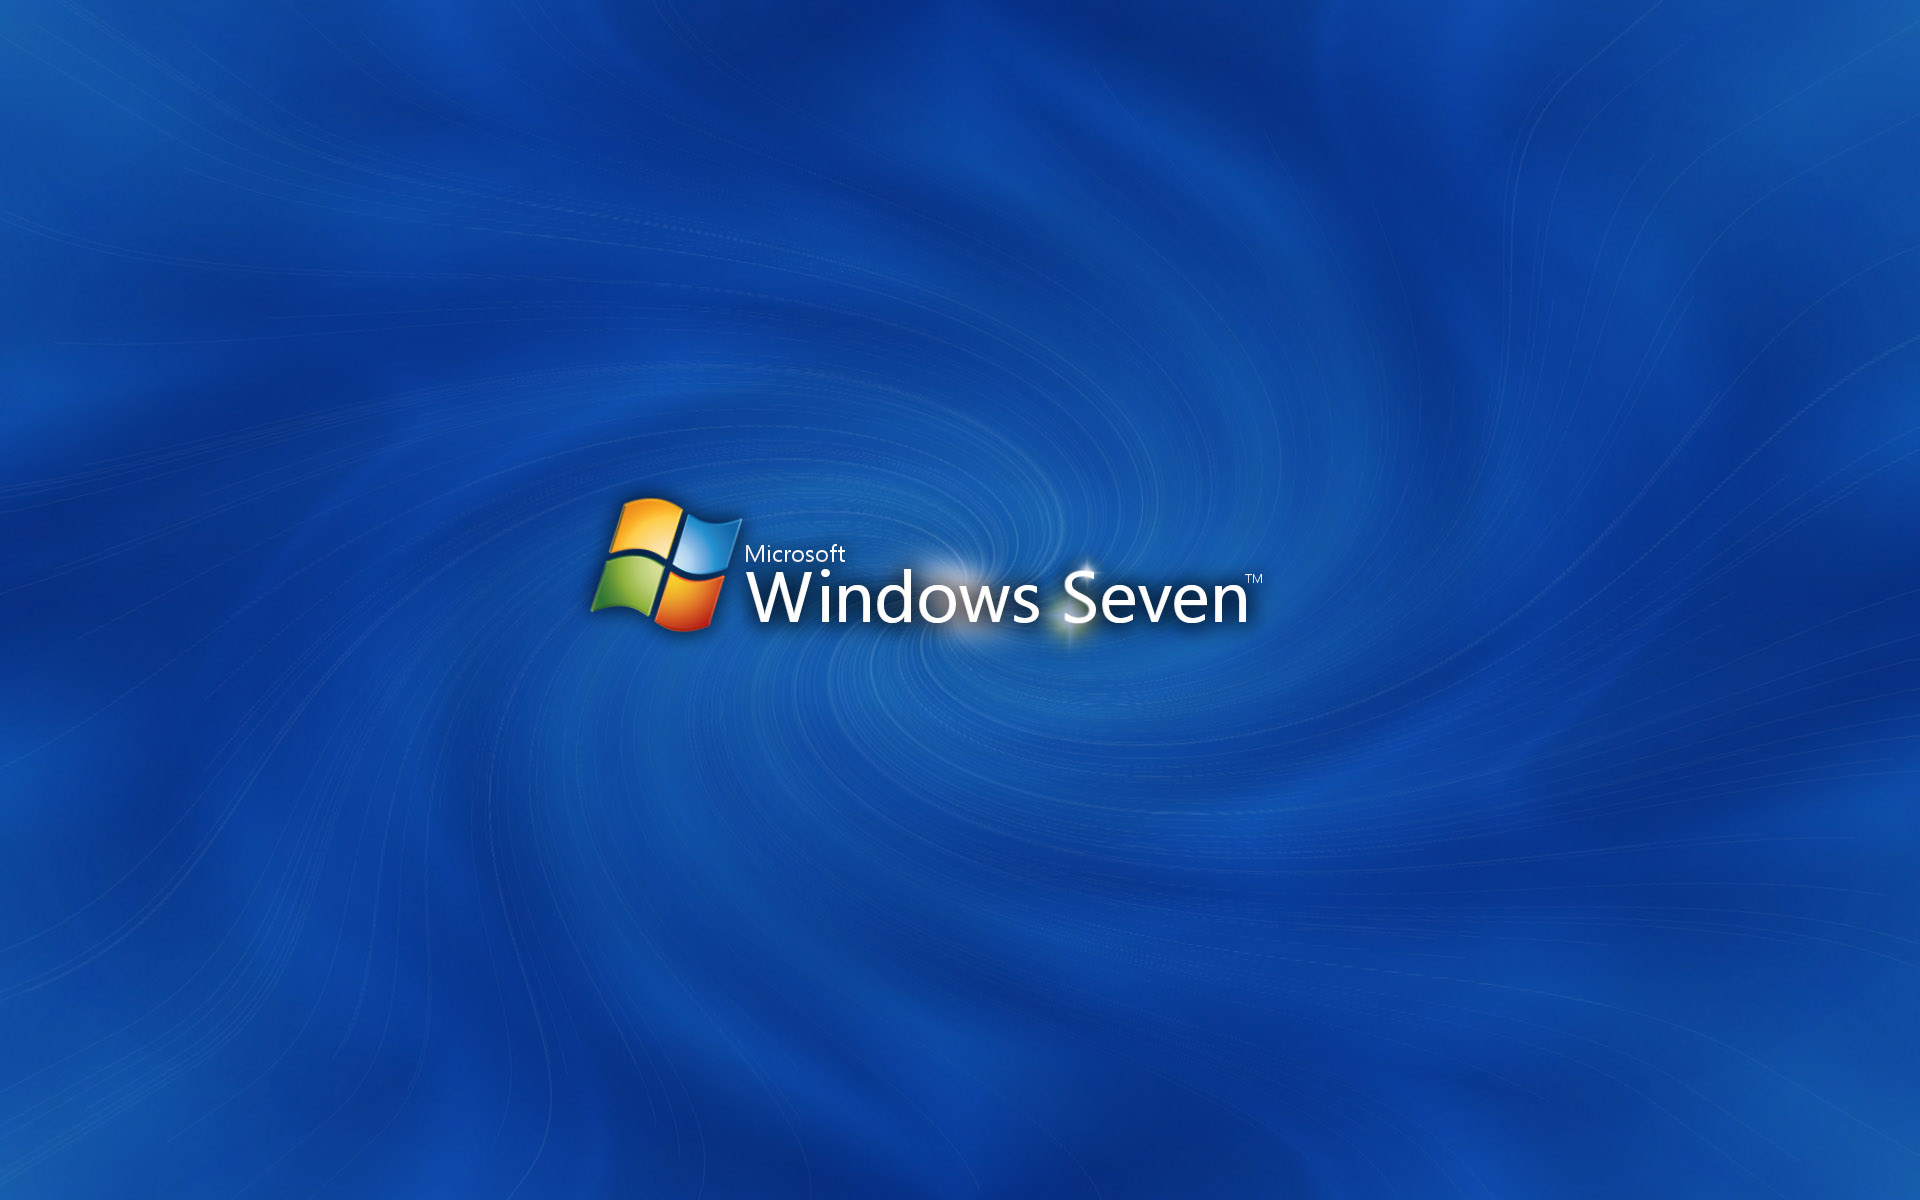 Windows 7 3D Wallpapers Themes - WallpaperSafari
